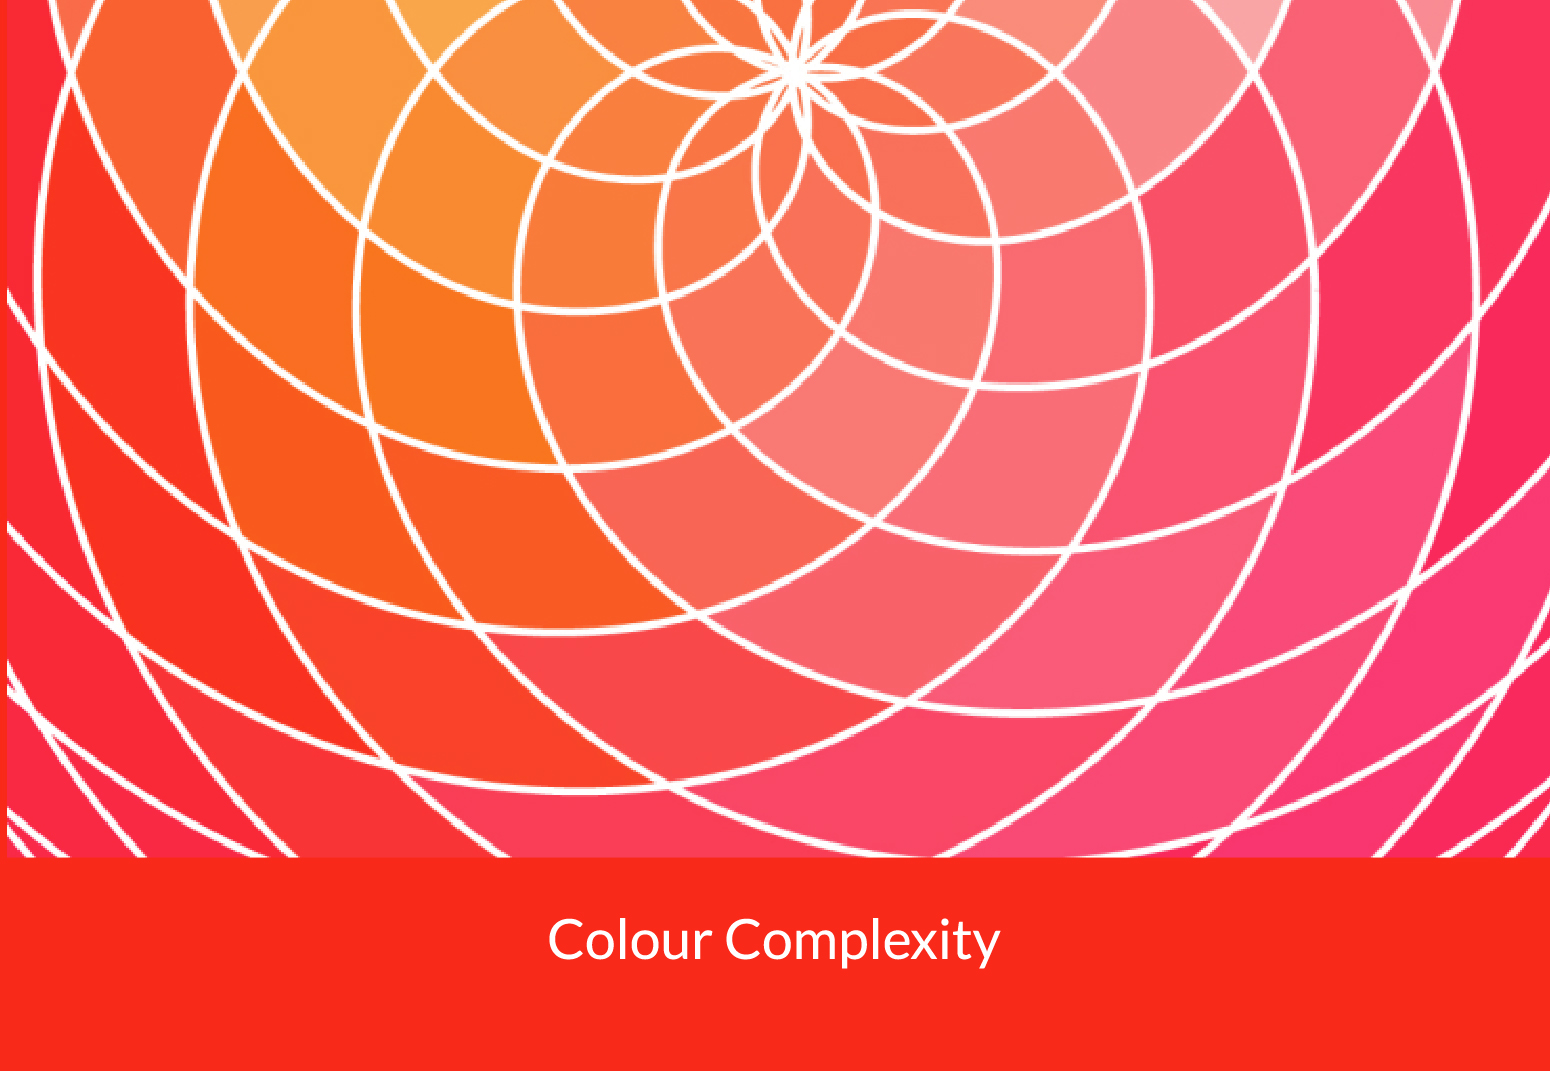 Colour Complexity